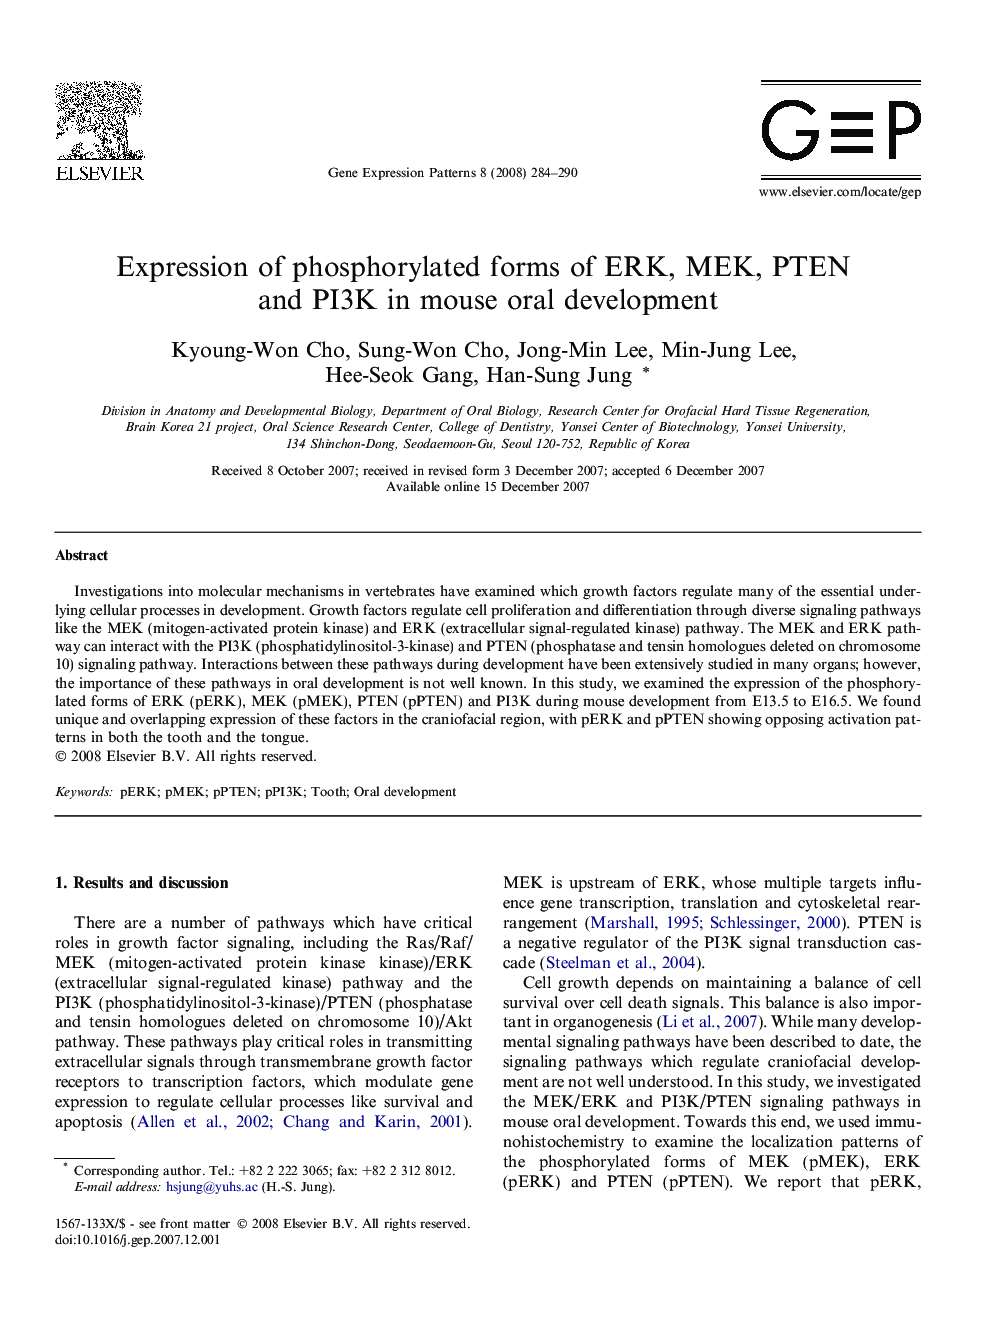 Expression of phosphorylated forms of ERK, MEK, PTEN and PI3K in mouse oral development